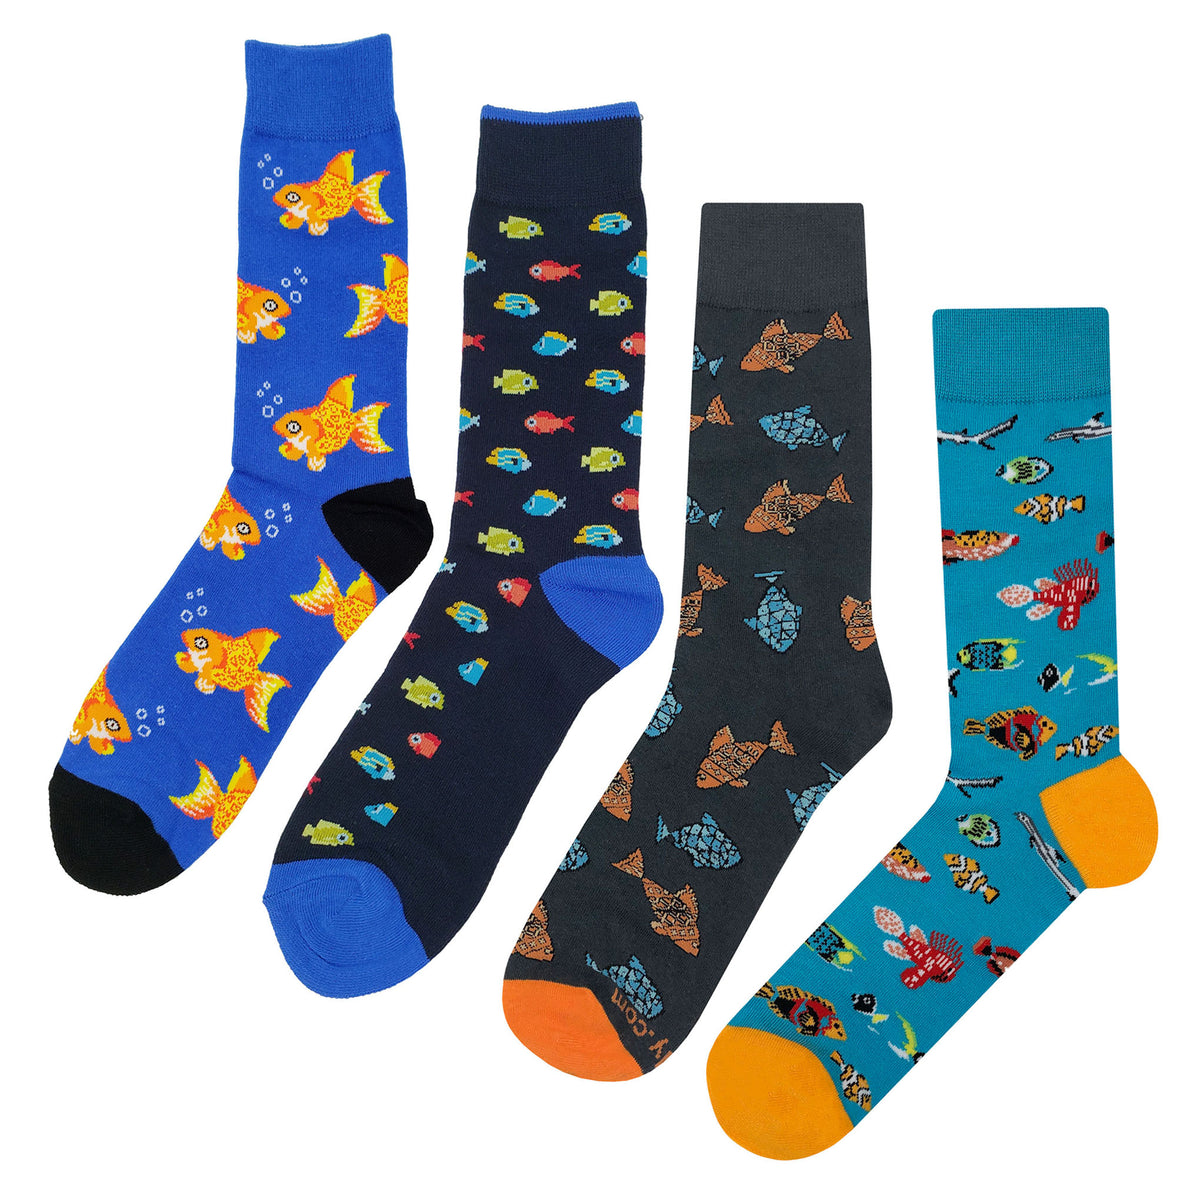 Fish Socks 4 Pack #2 - Fun and Crazy Socks at